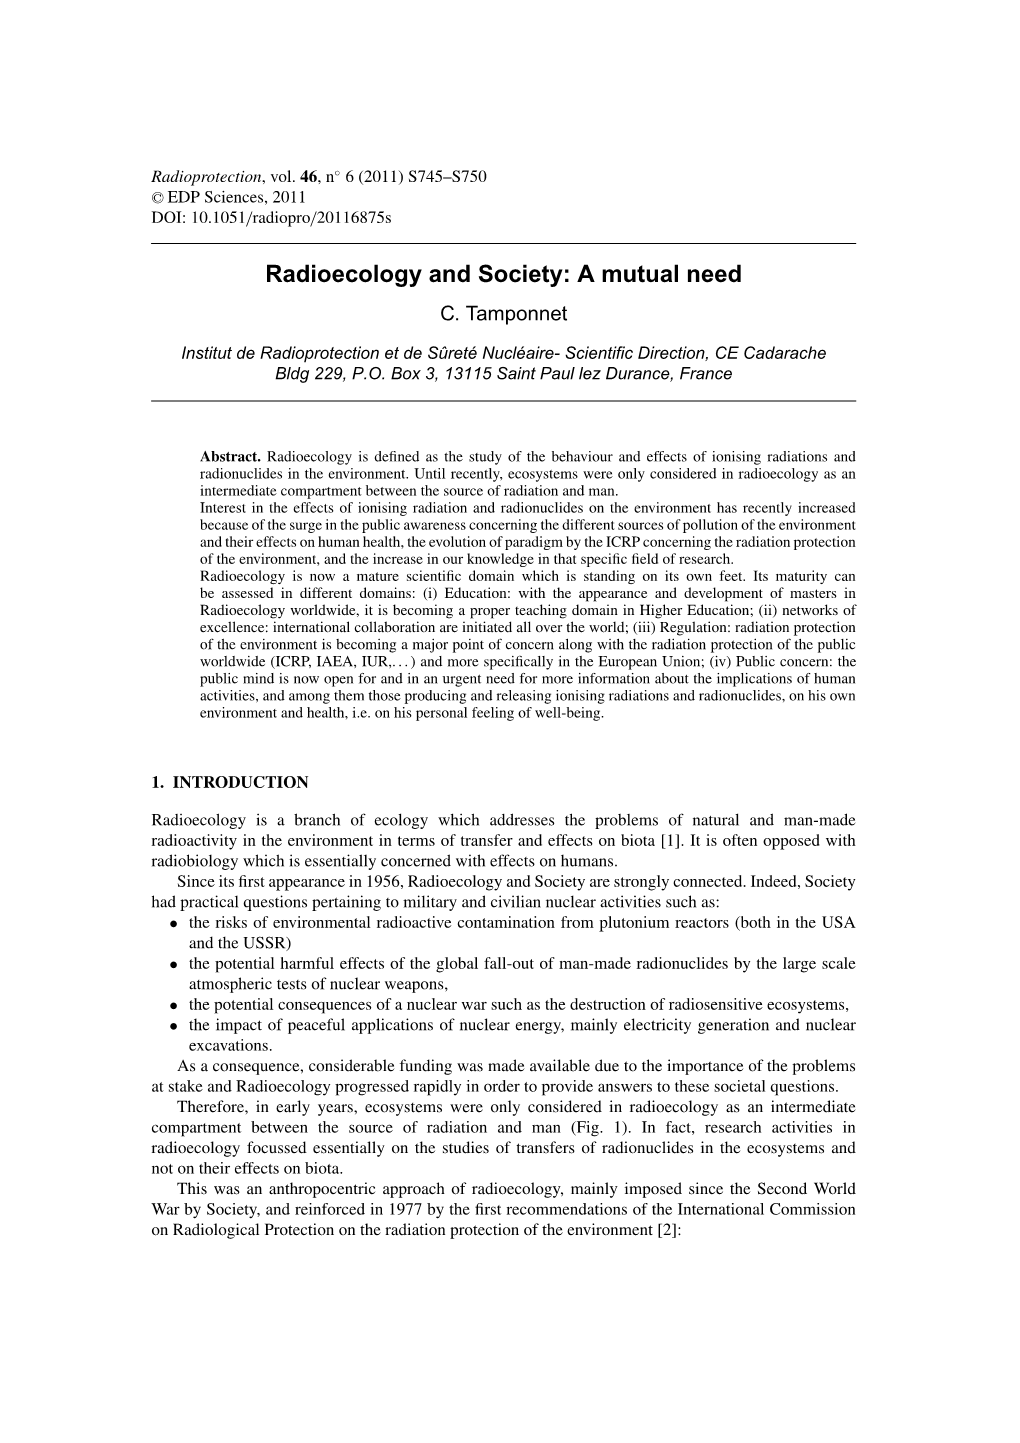 Radioecology and Society: a Mutual Need C